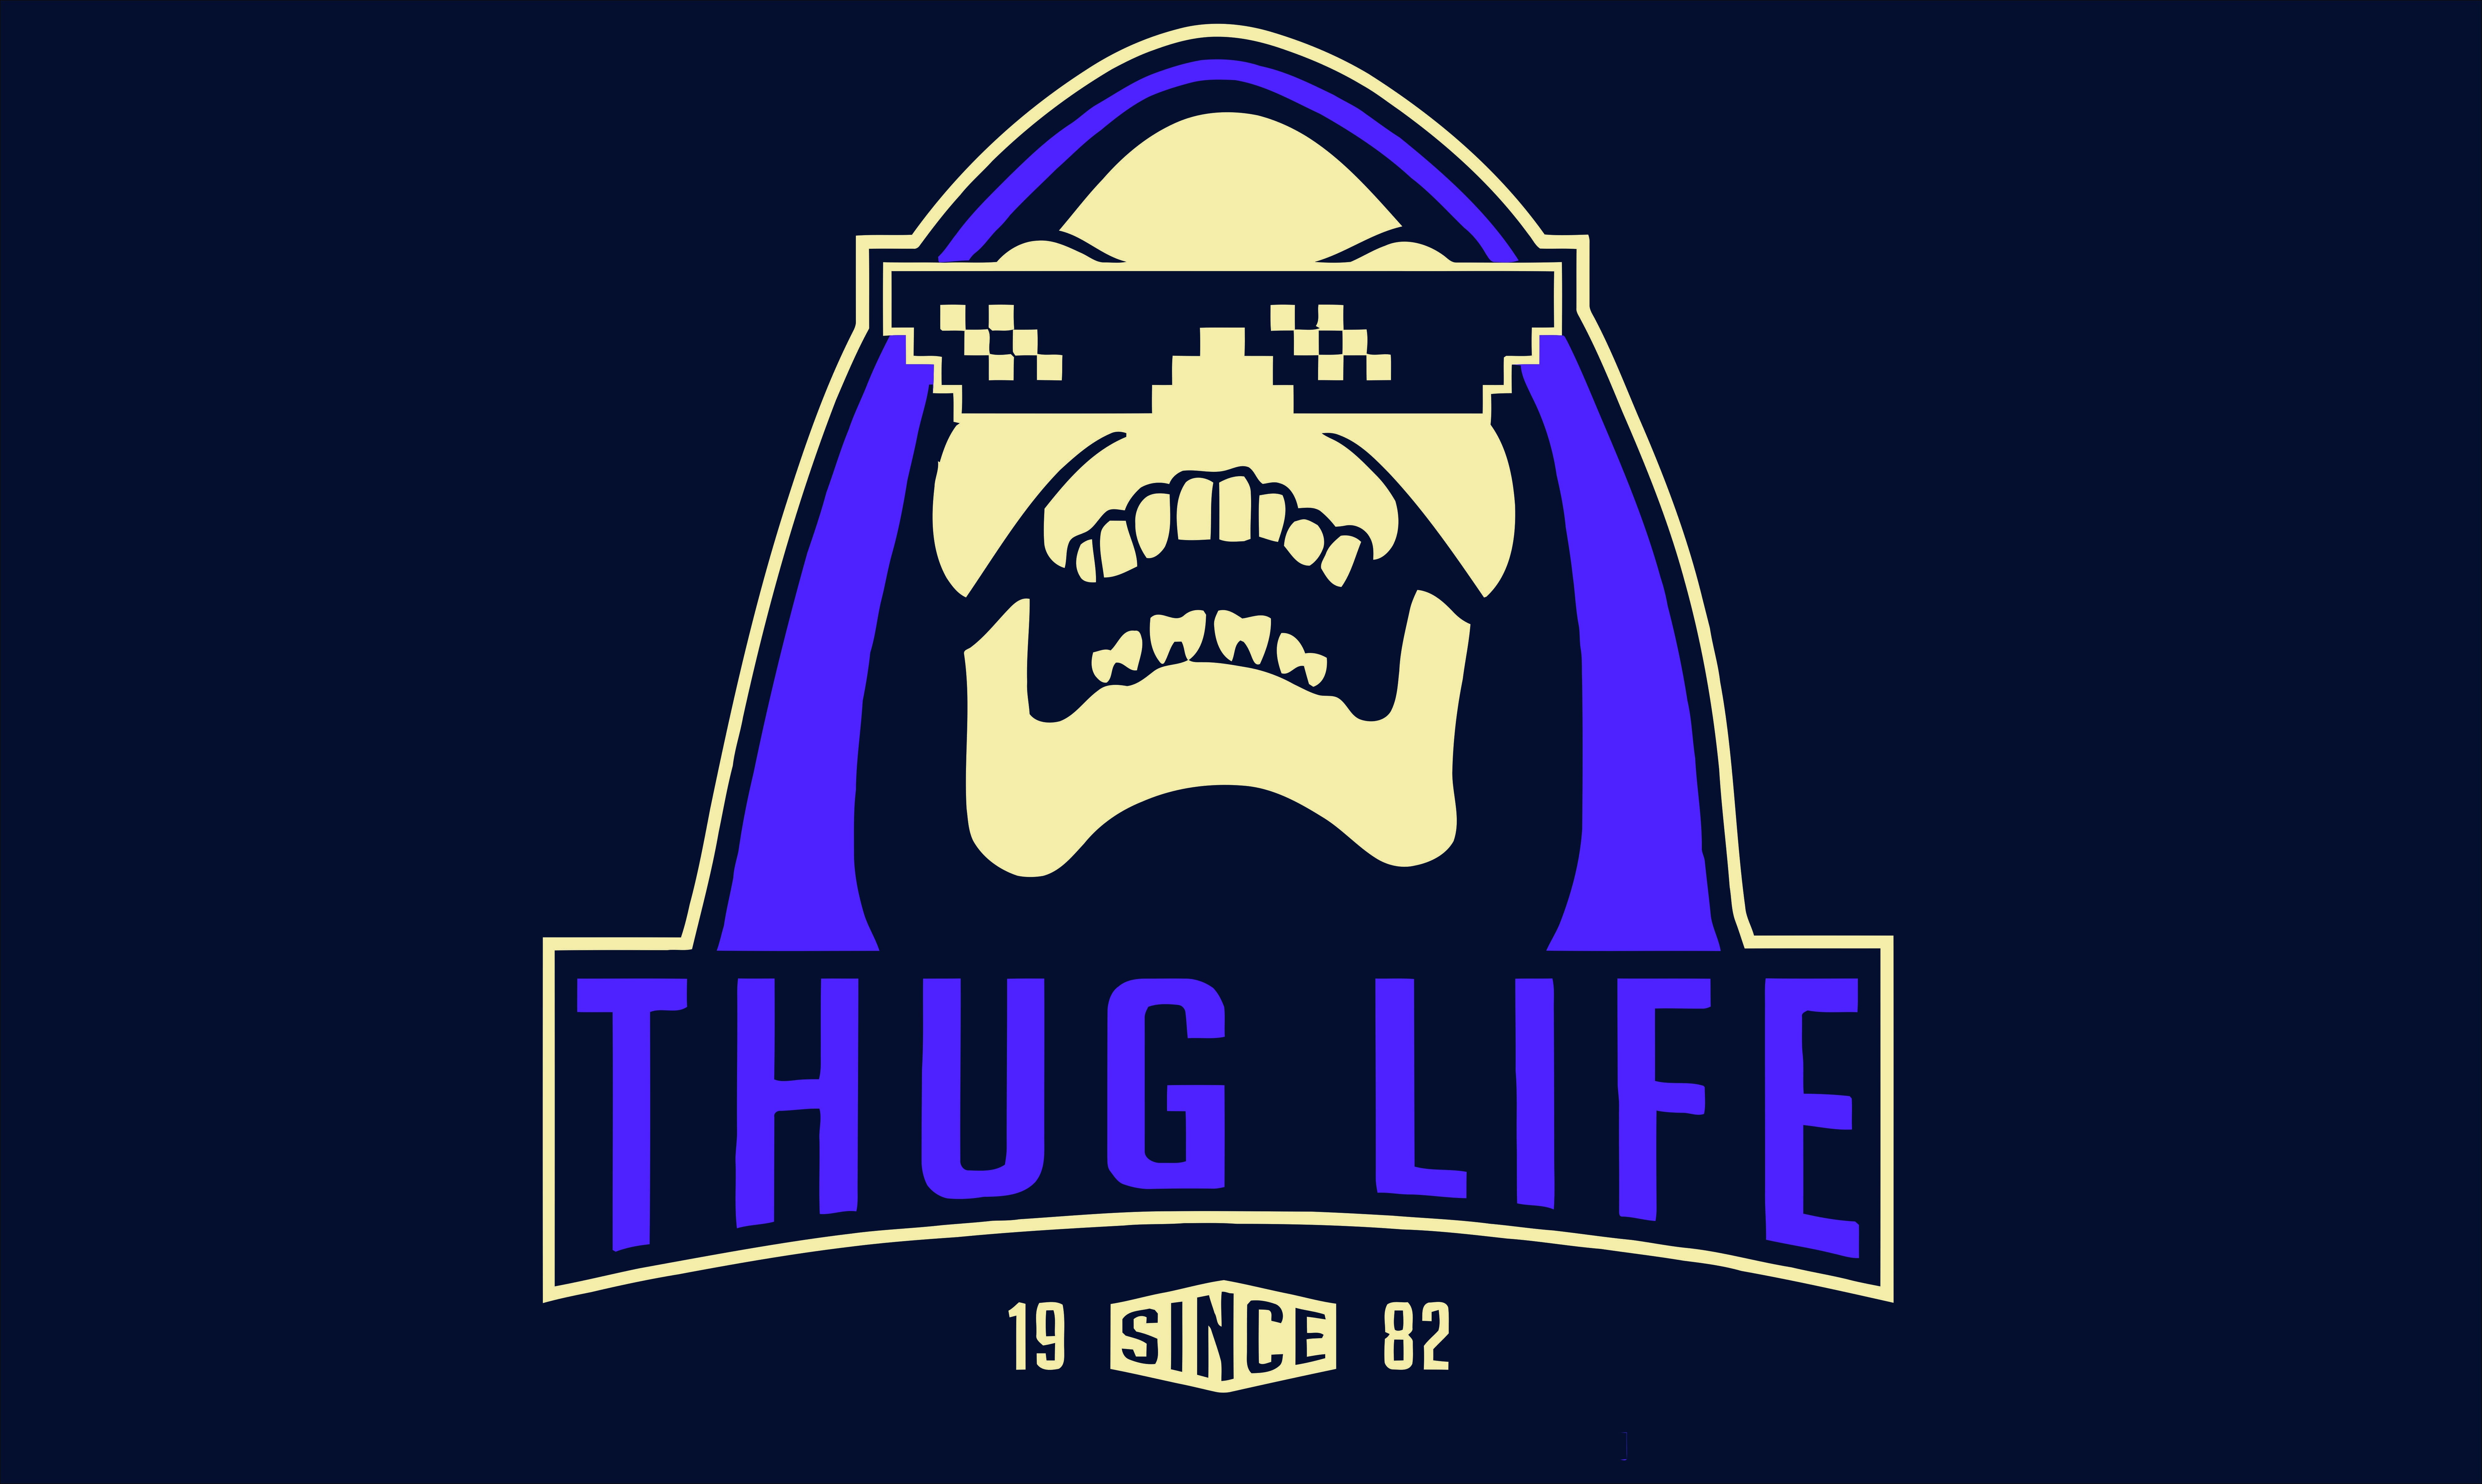 Thug life logo, life, skull and bones